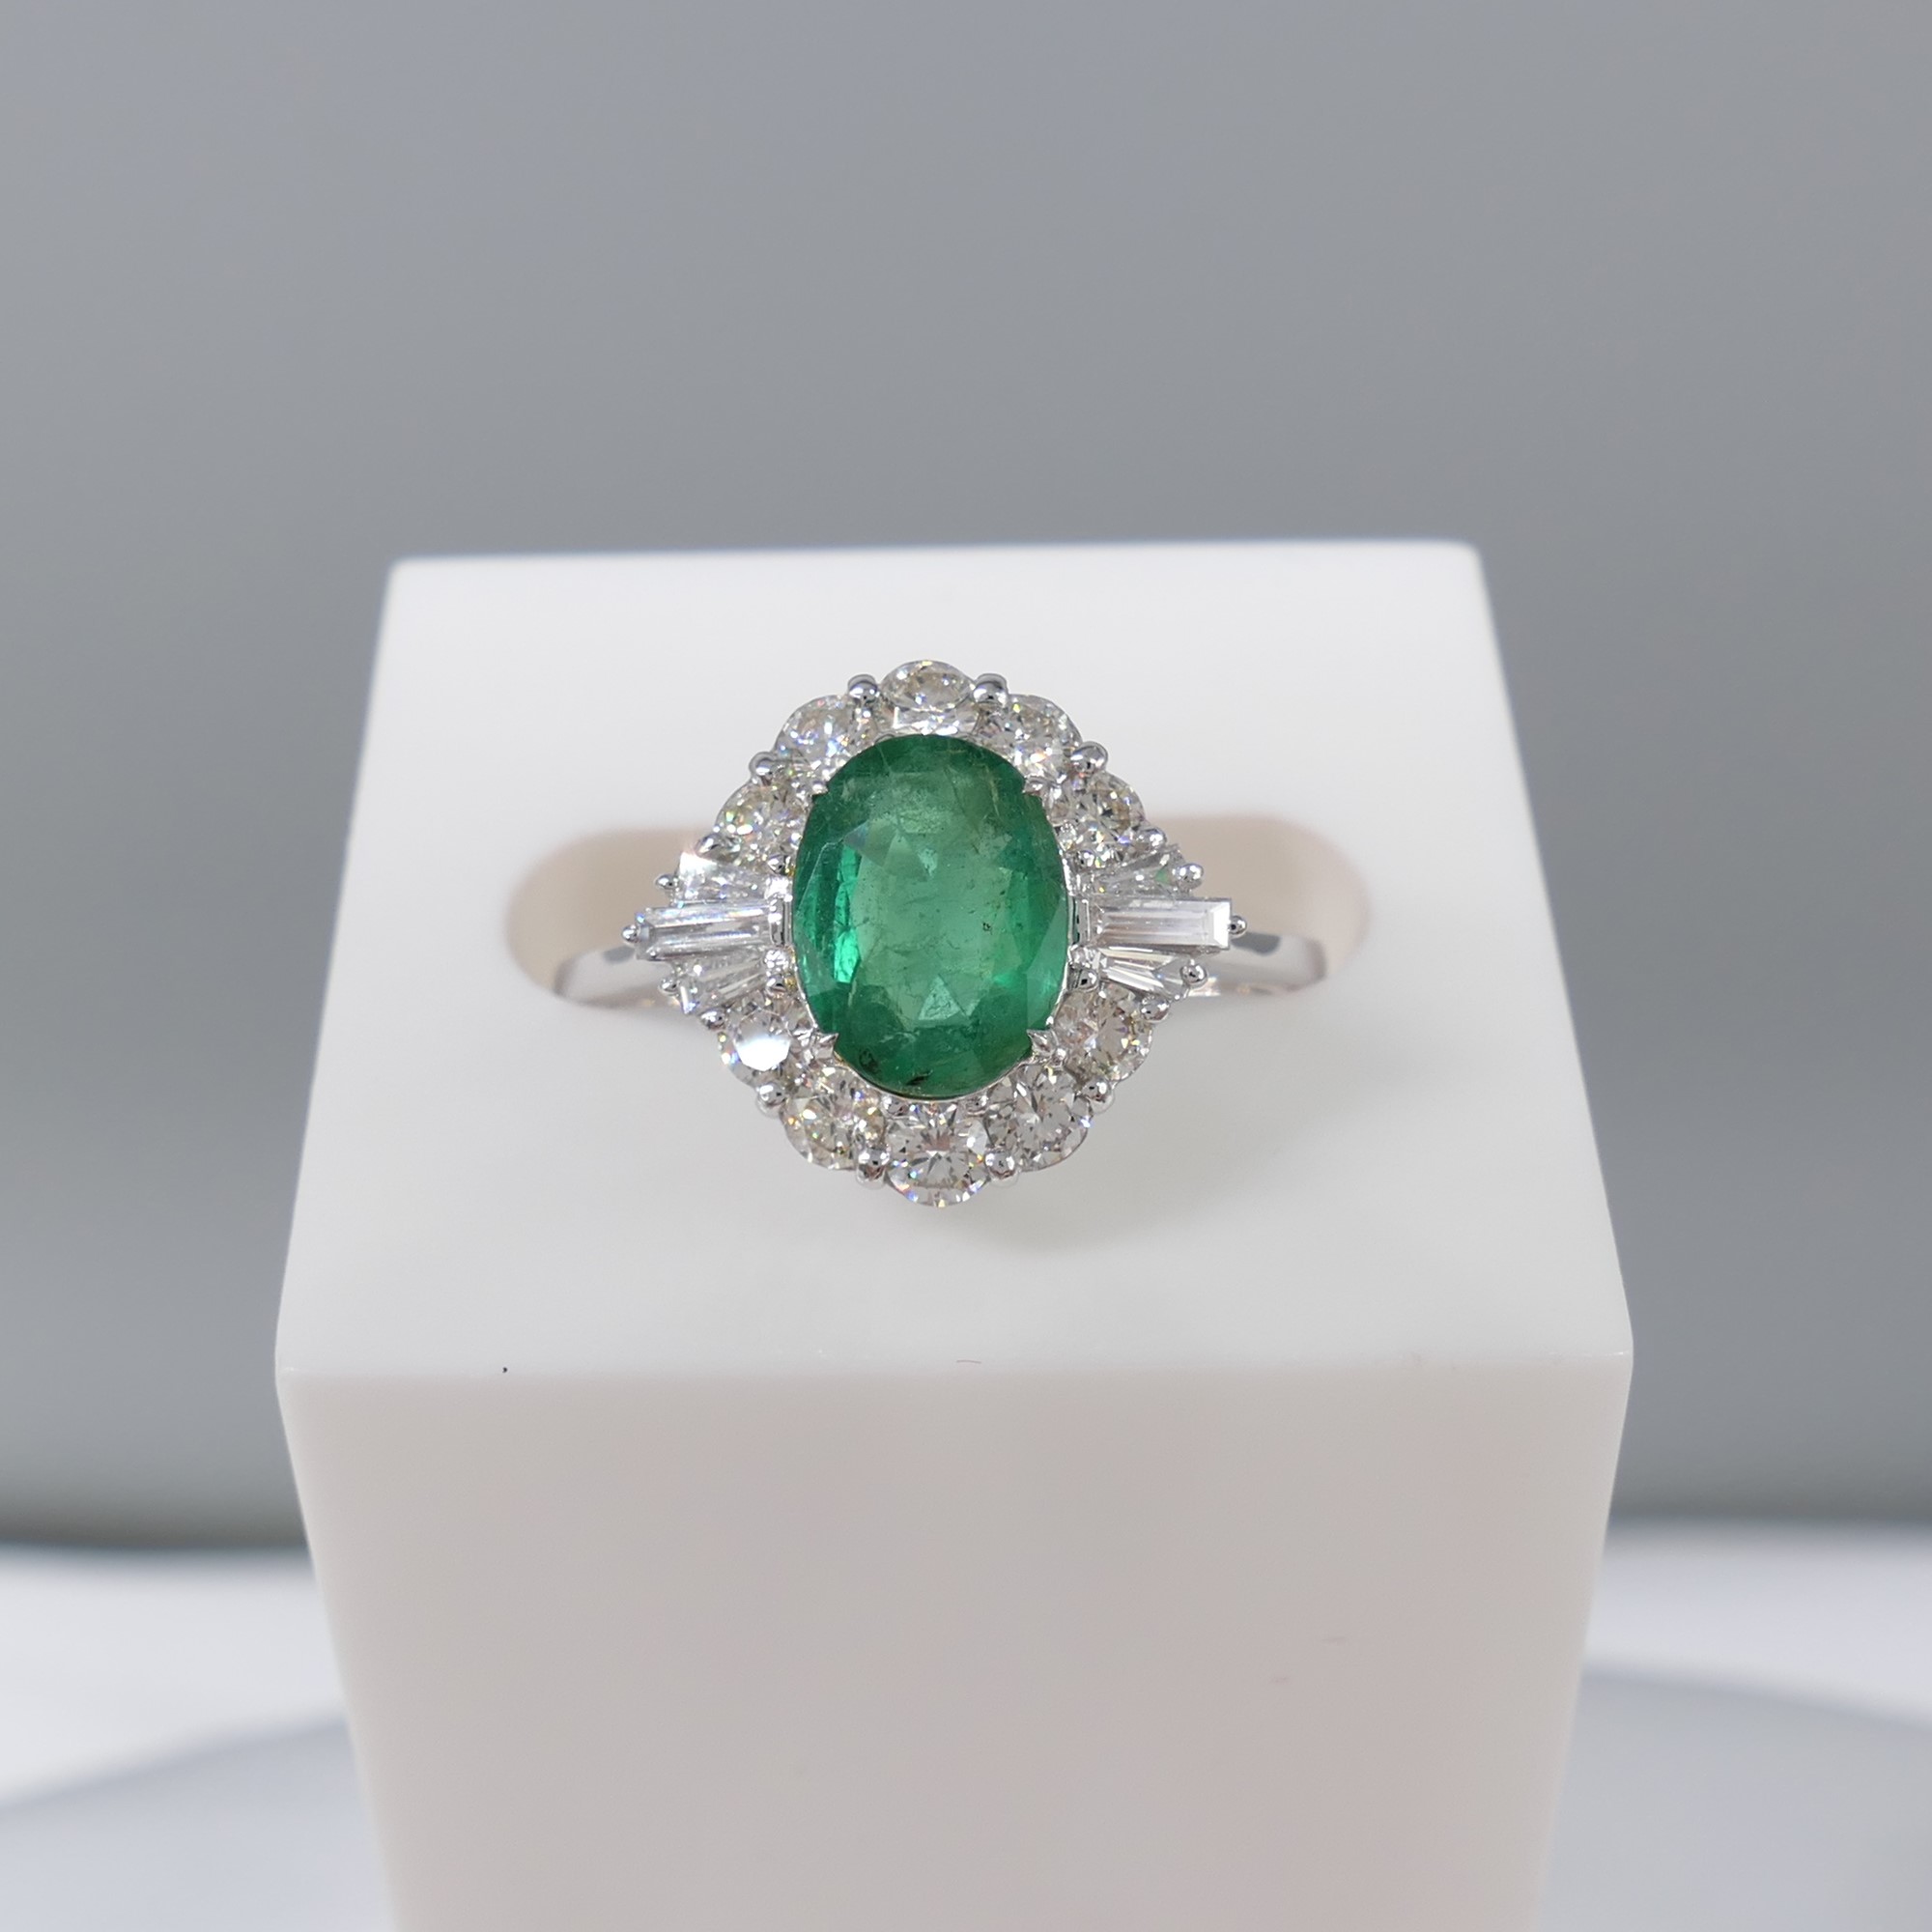 Stylish 1.05 carat emerald and diamond dress ring - Image 7 of 8